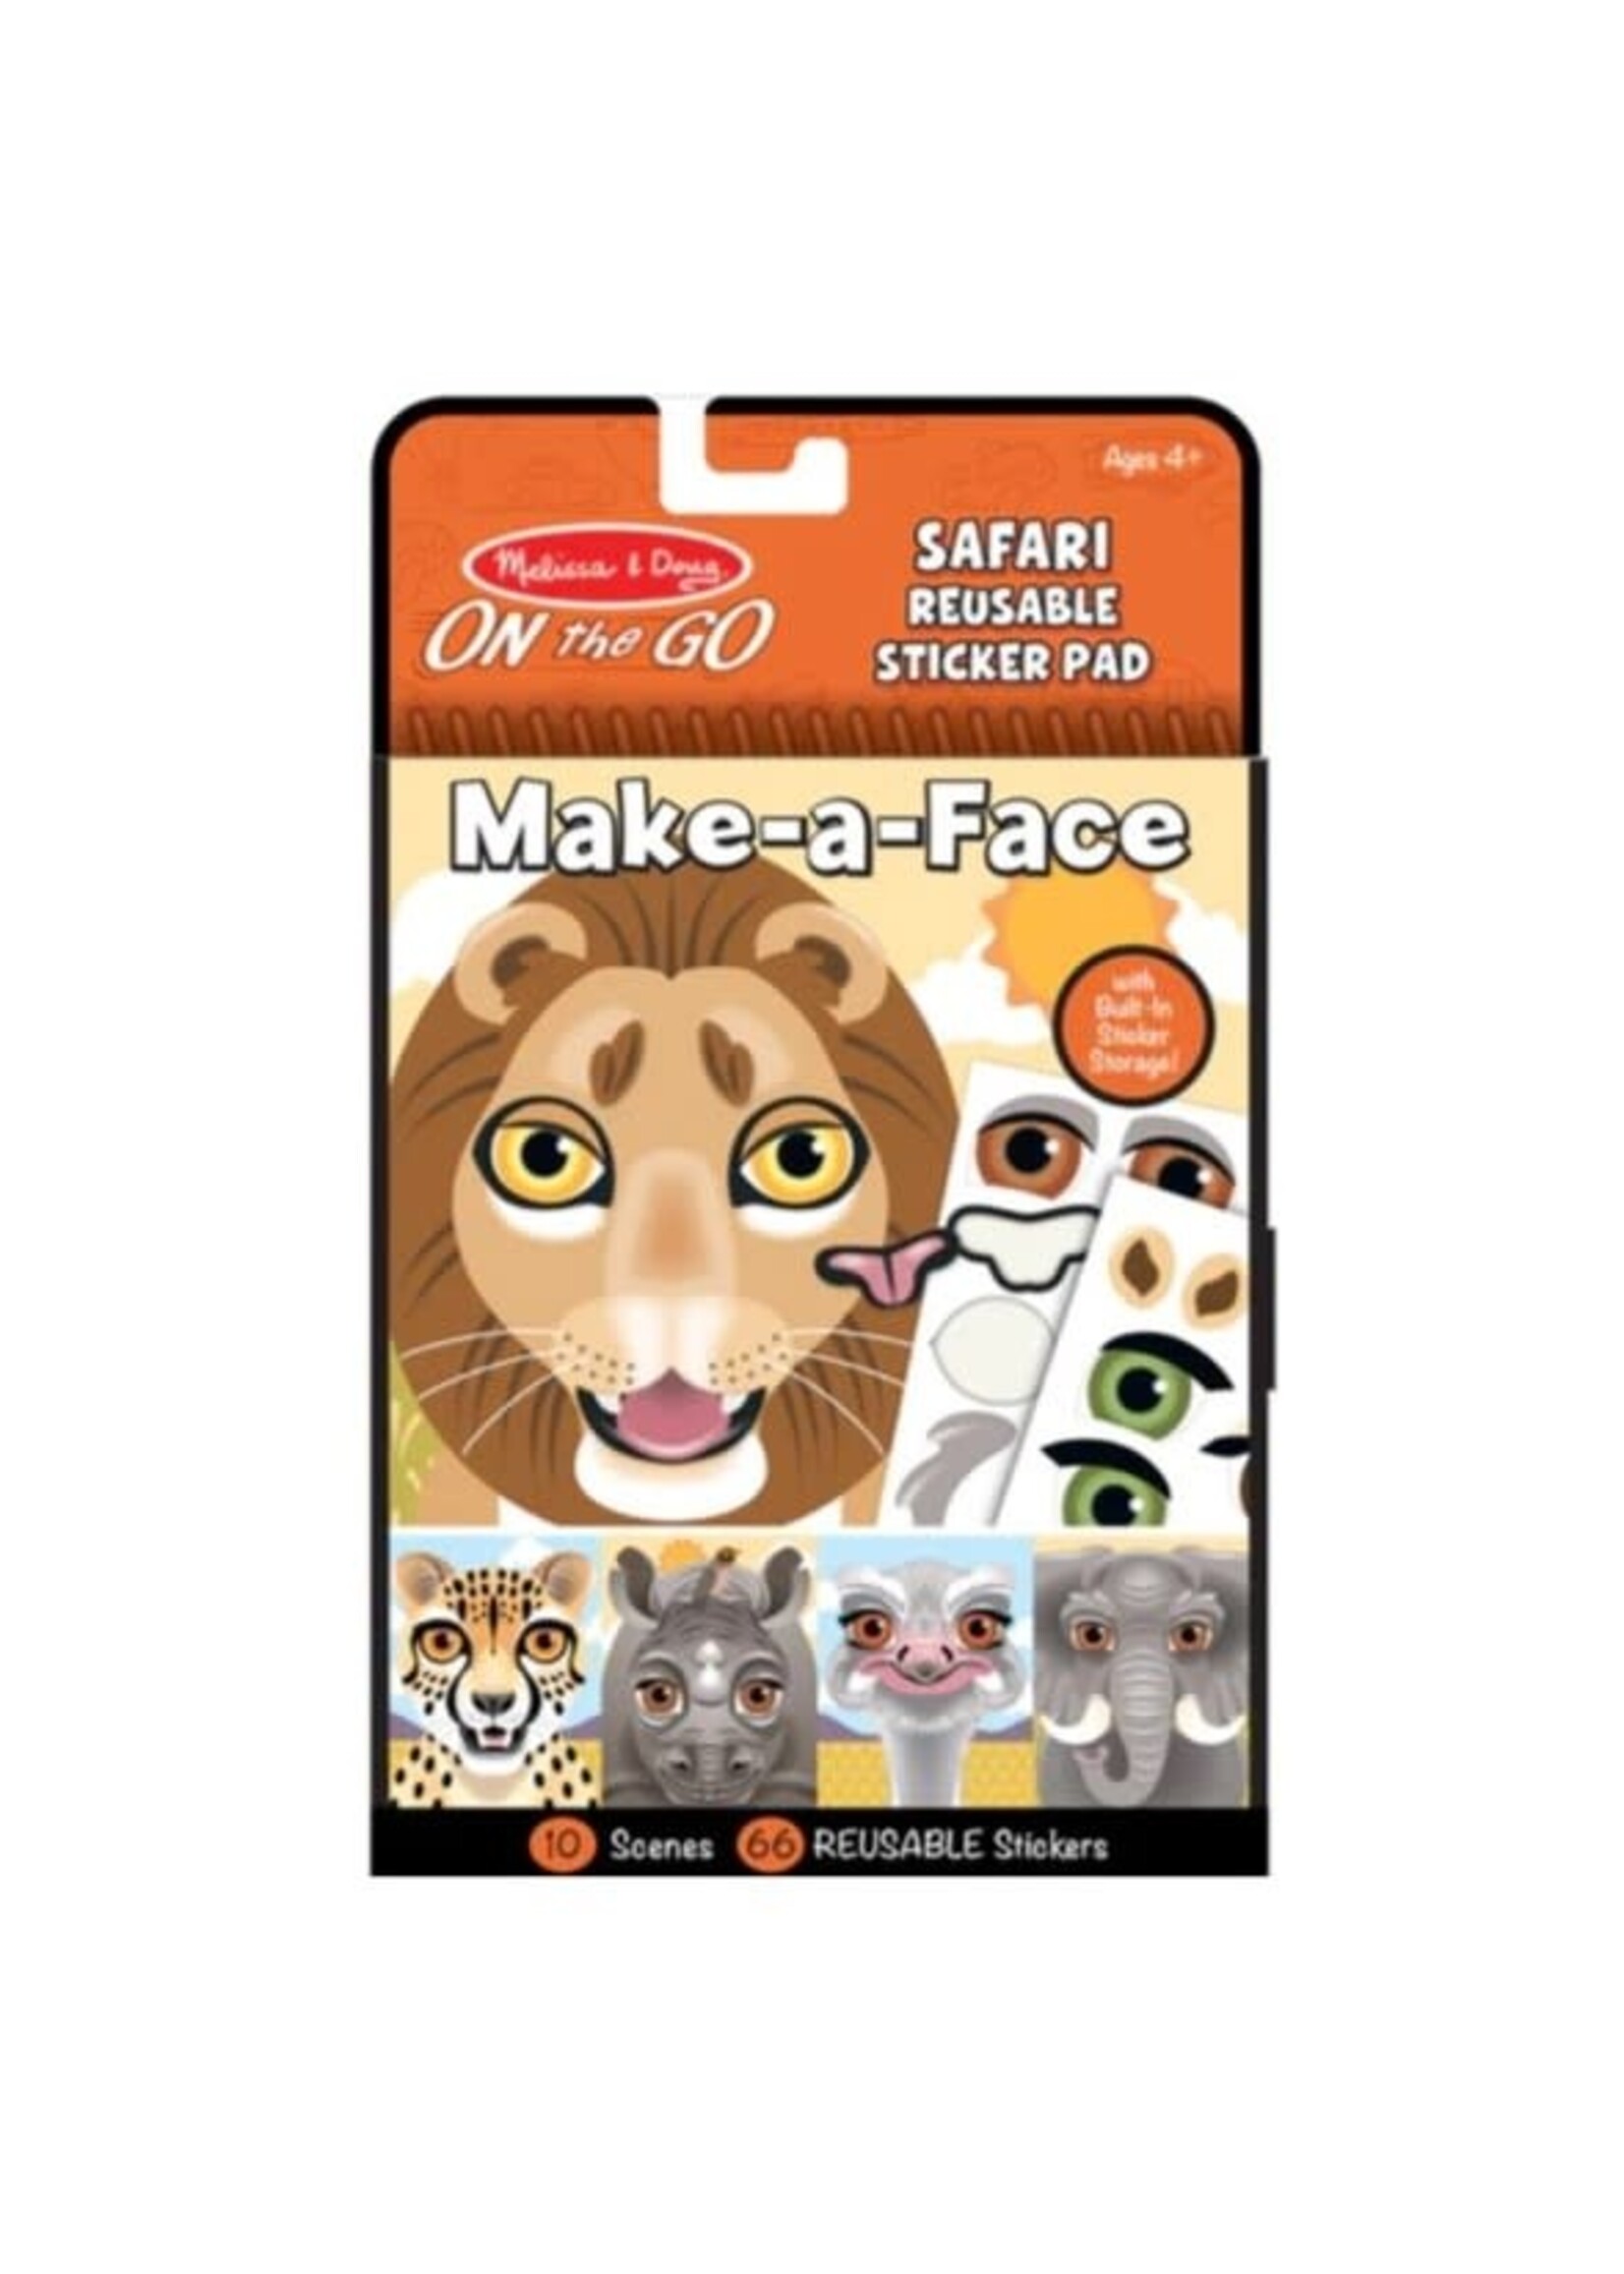 Make-a-Face -Safari Reusable Sticker Pad - On the Go Travel